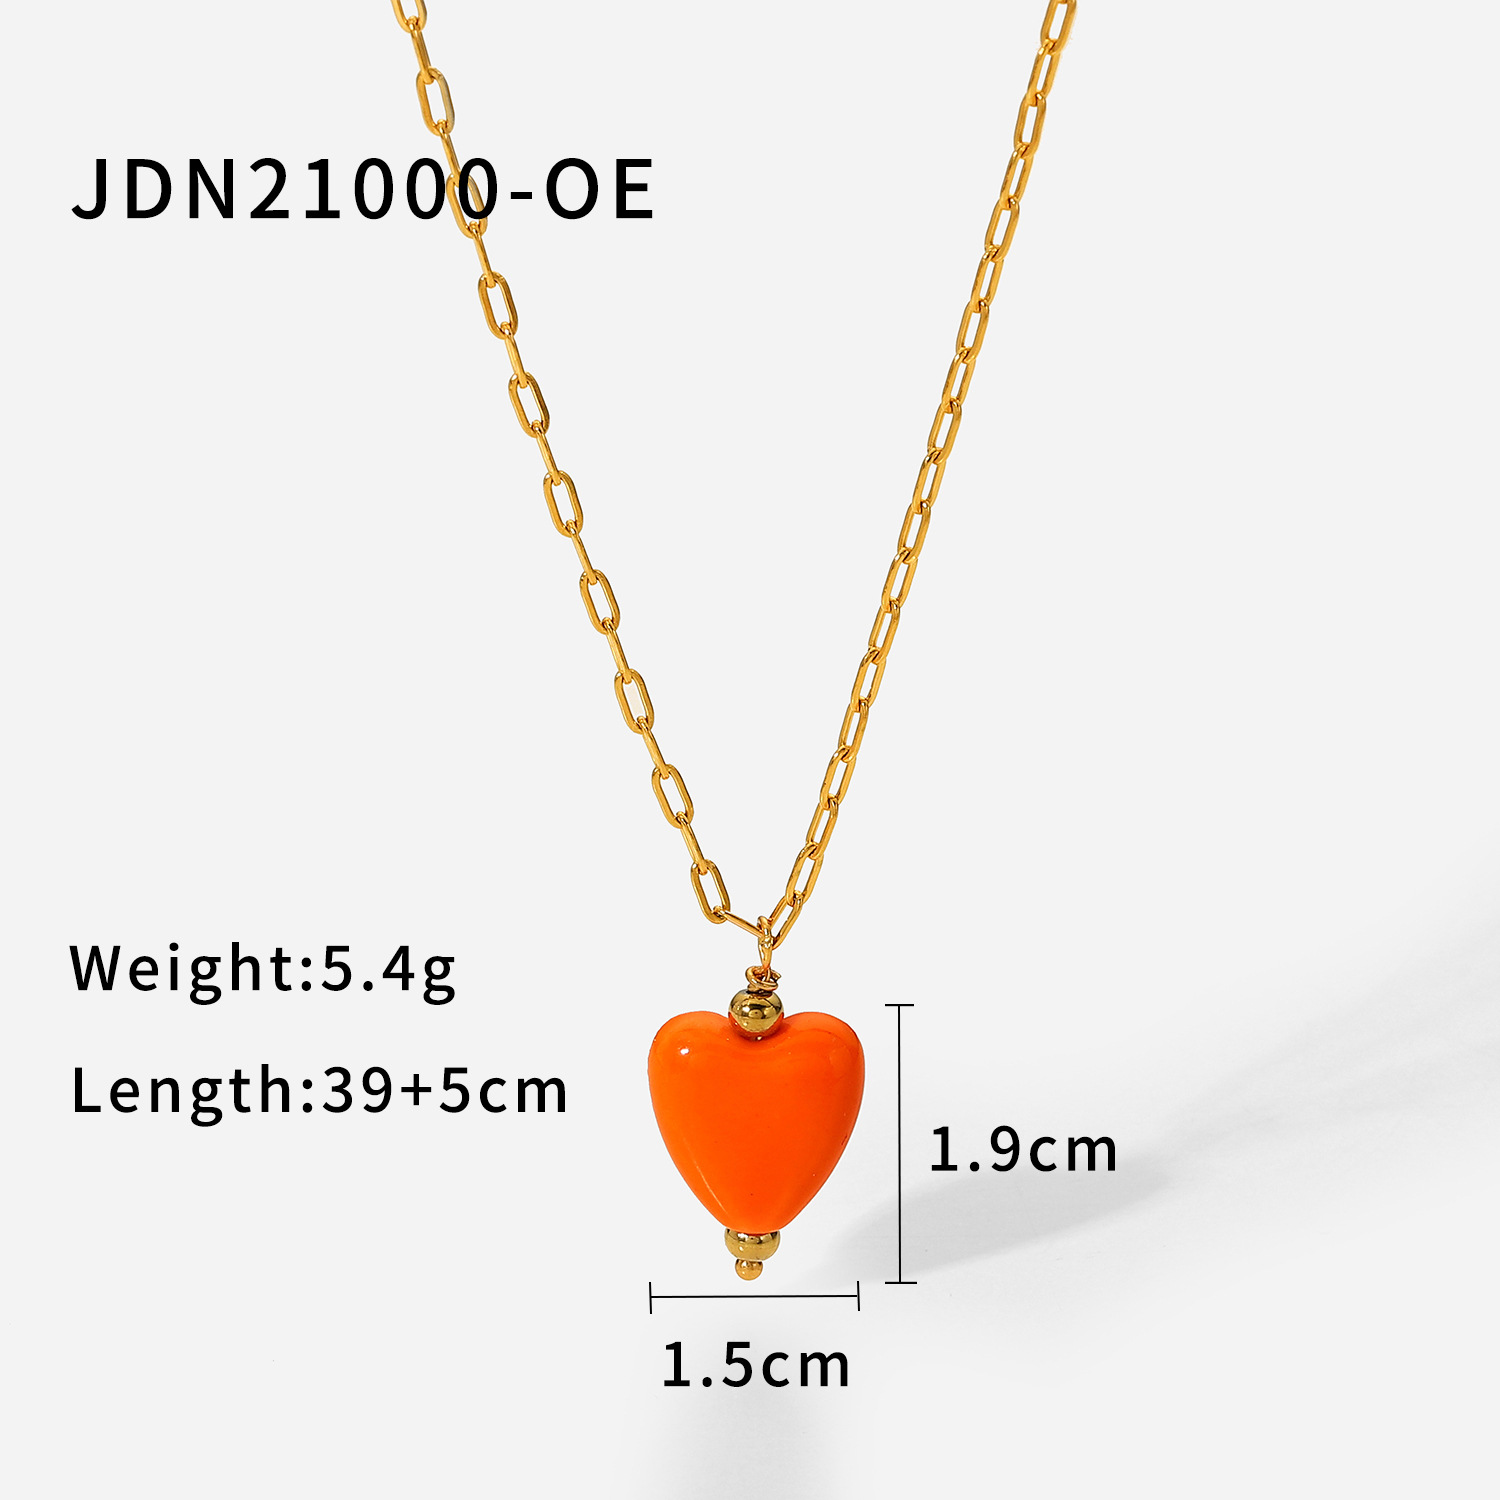 JDN21000-OE